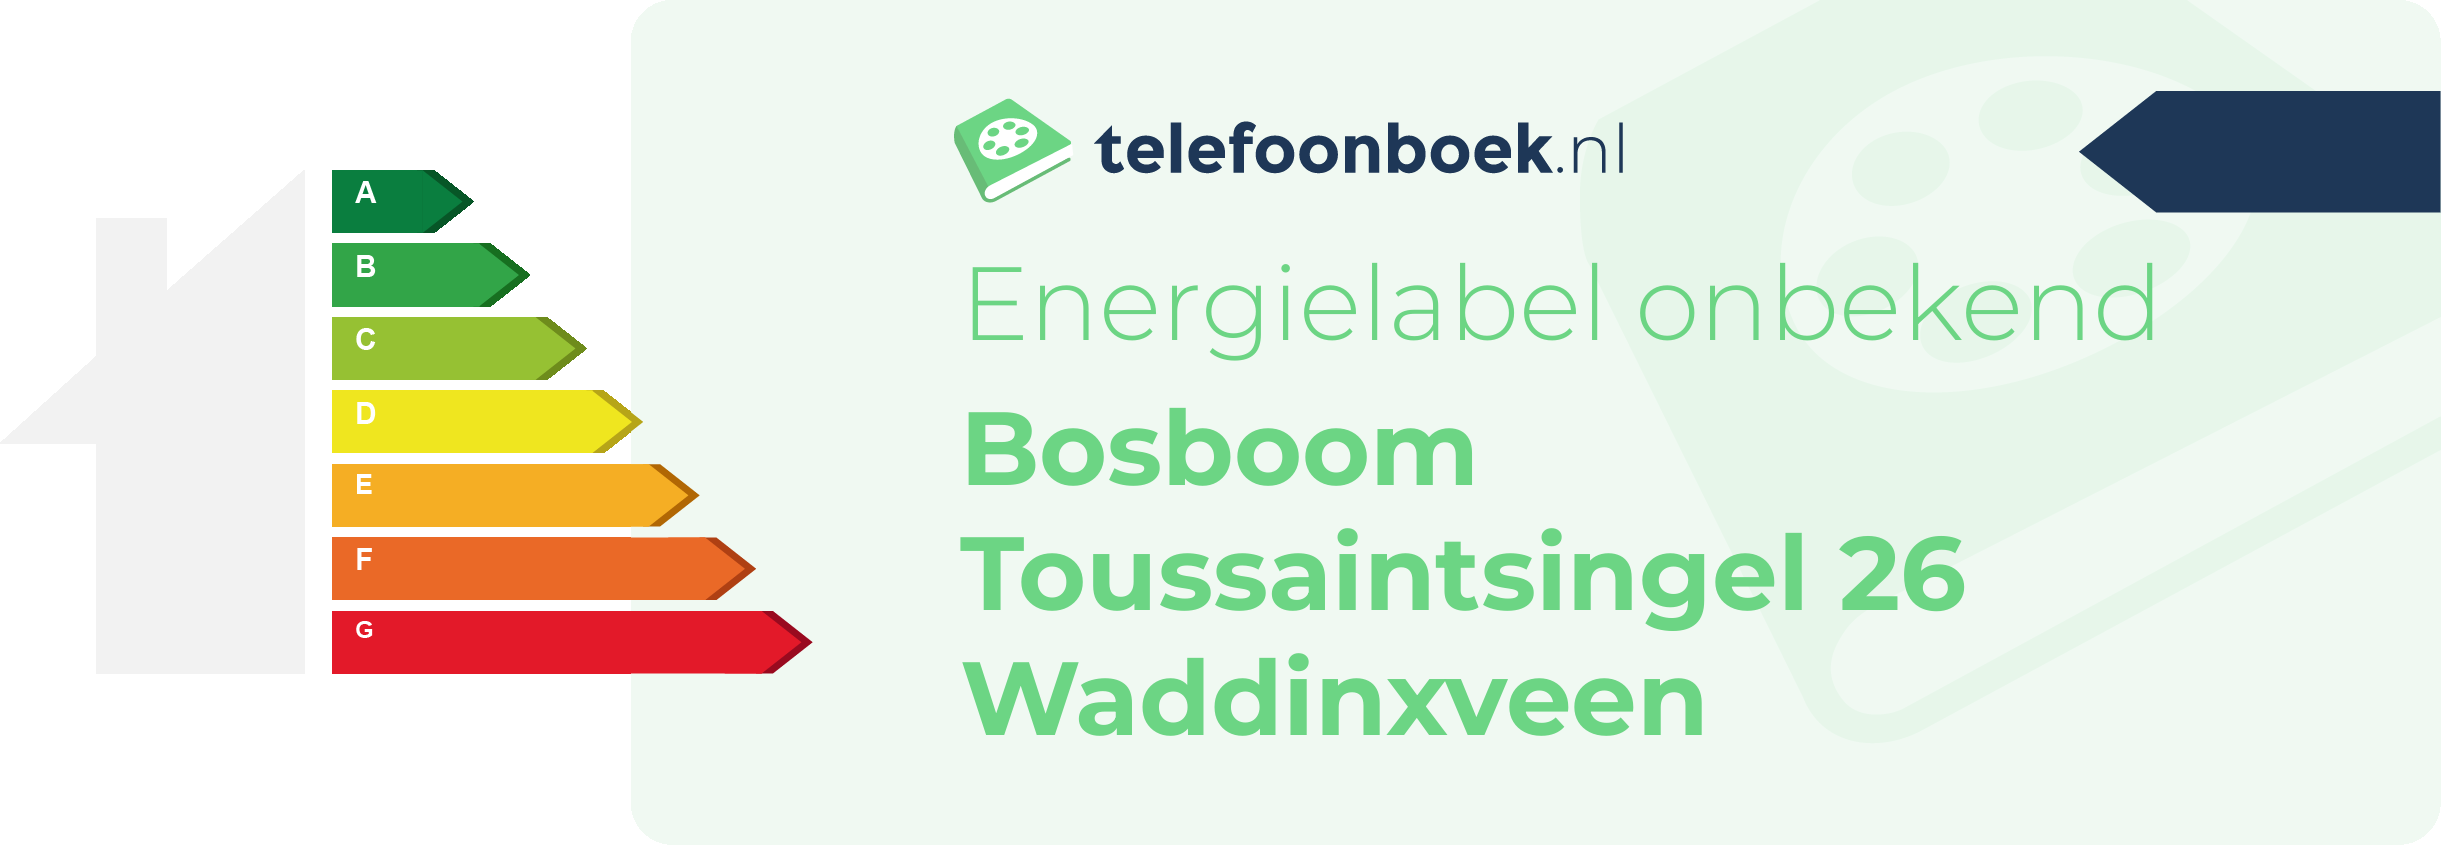 Energielabel Bosboom Toussaintsingel 26 Waddinxveen